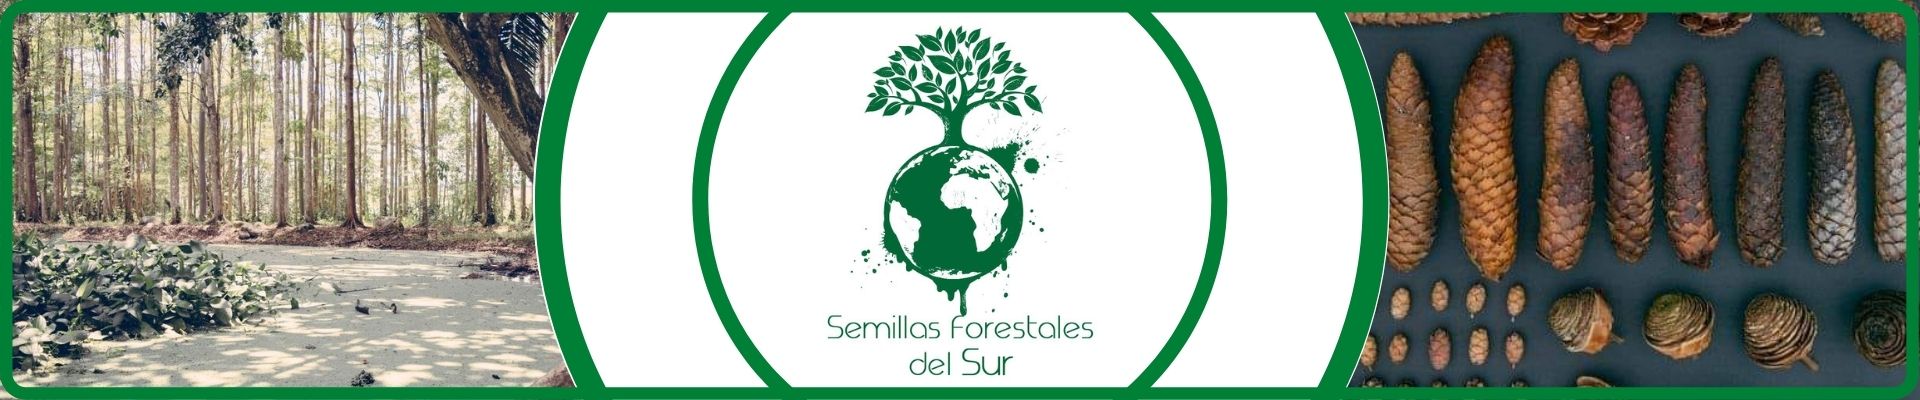 Semillas forestales del sur agroshow banner